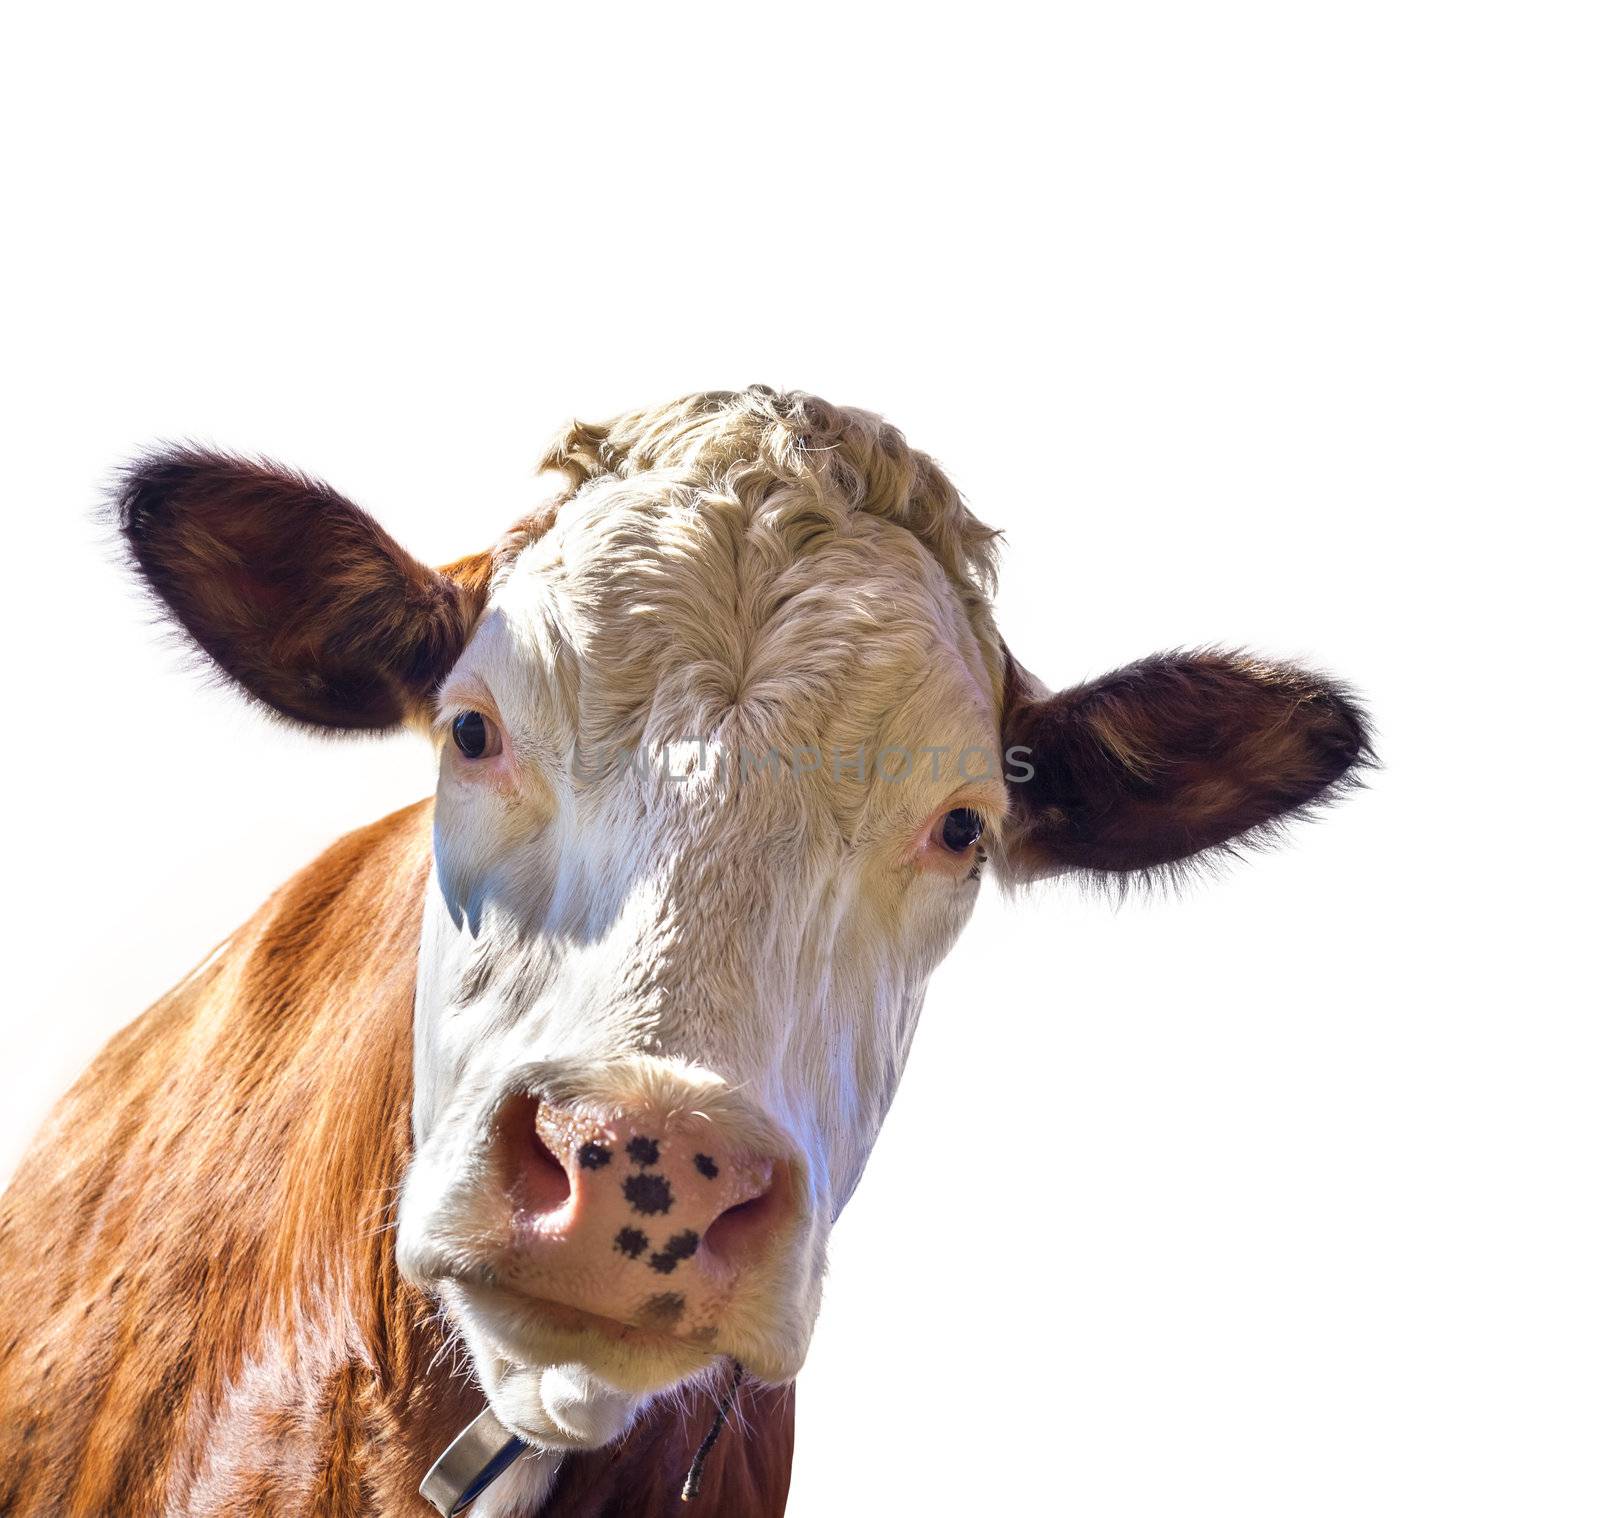 Portrait of a cute cow by TristanBM